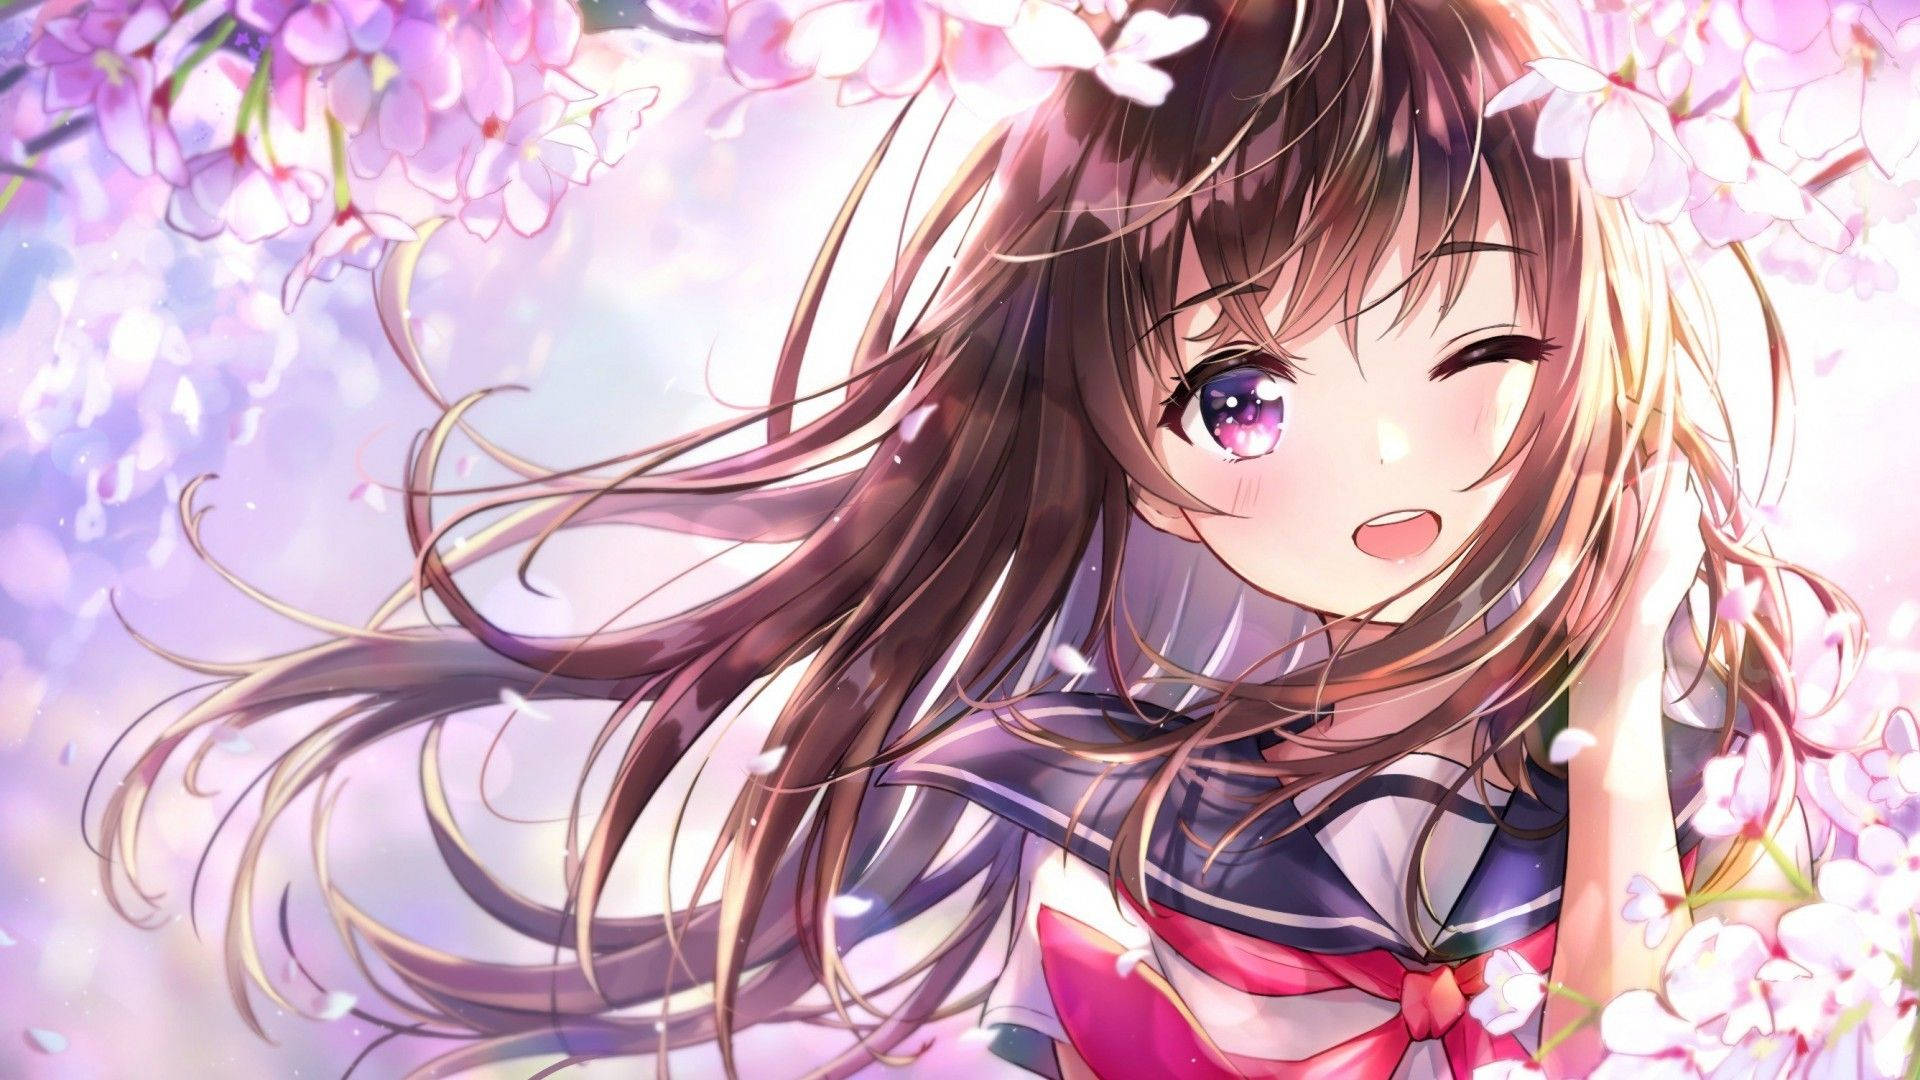 Cute Anime Girl Winking